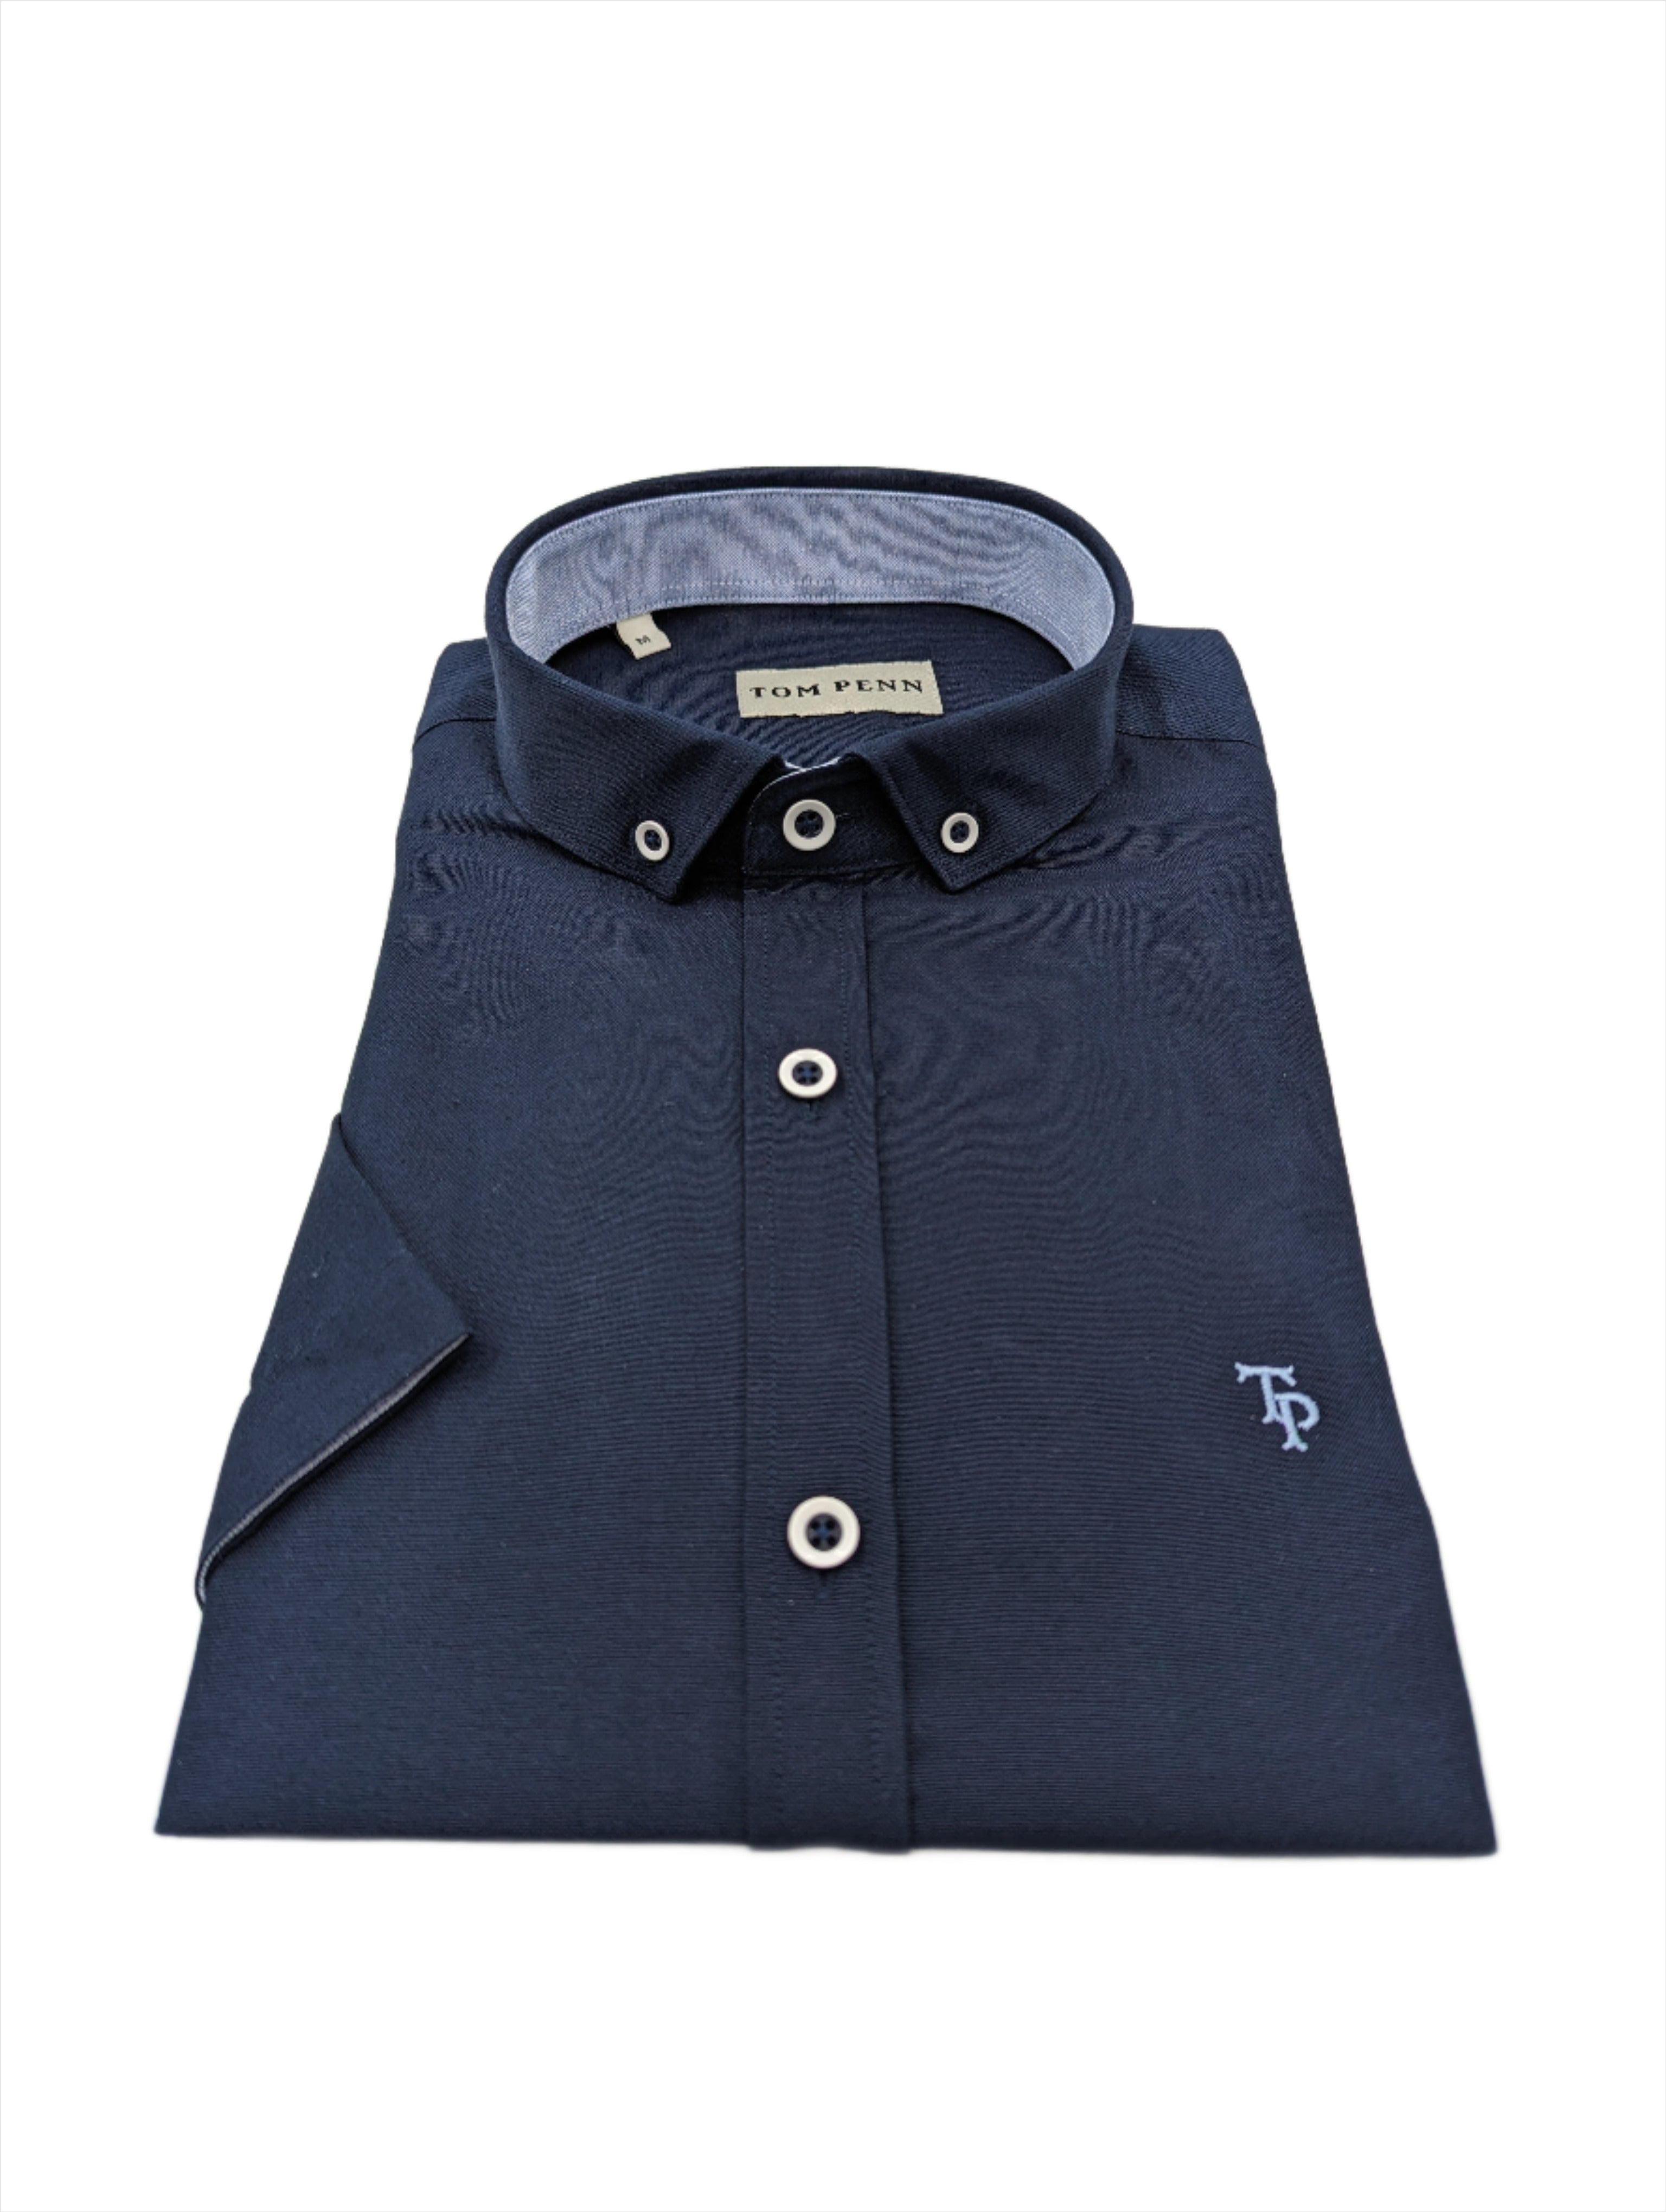 Short Sleeve Oxford Navy Shirt-Collar detail